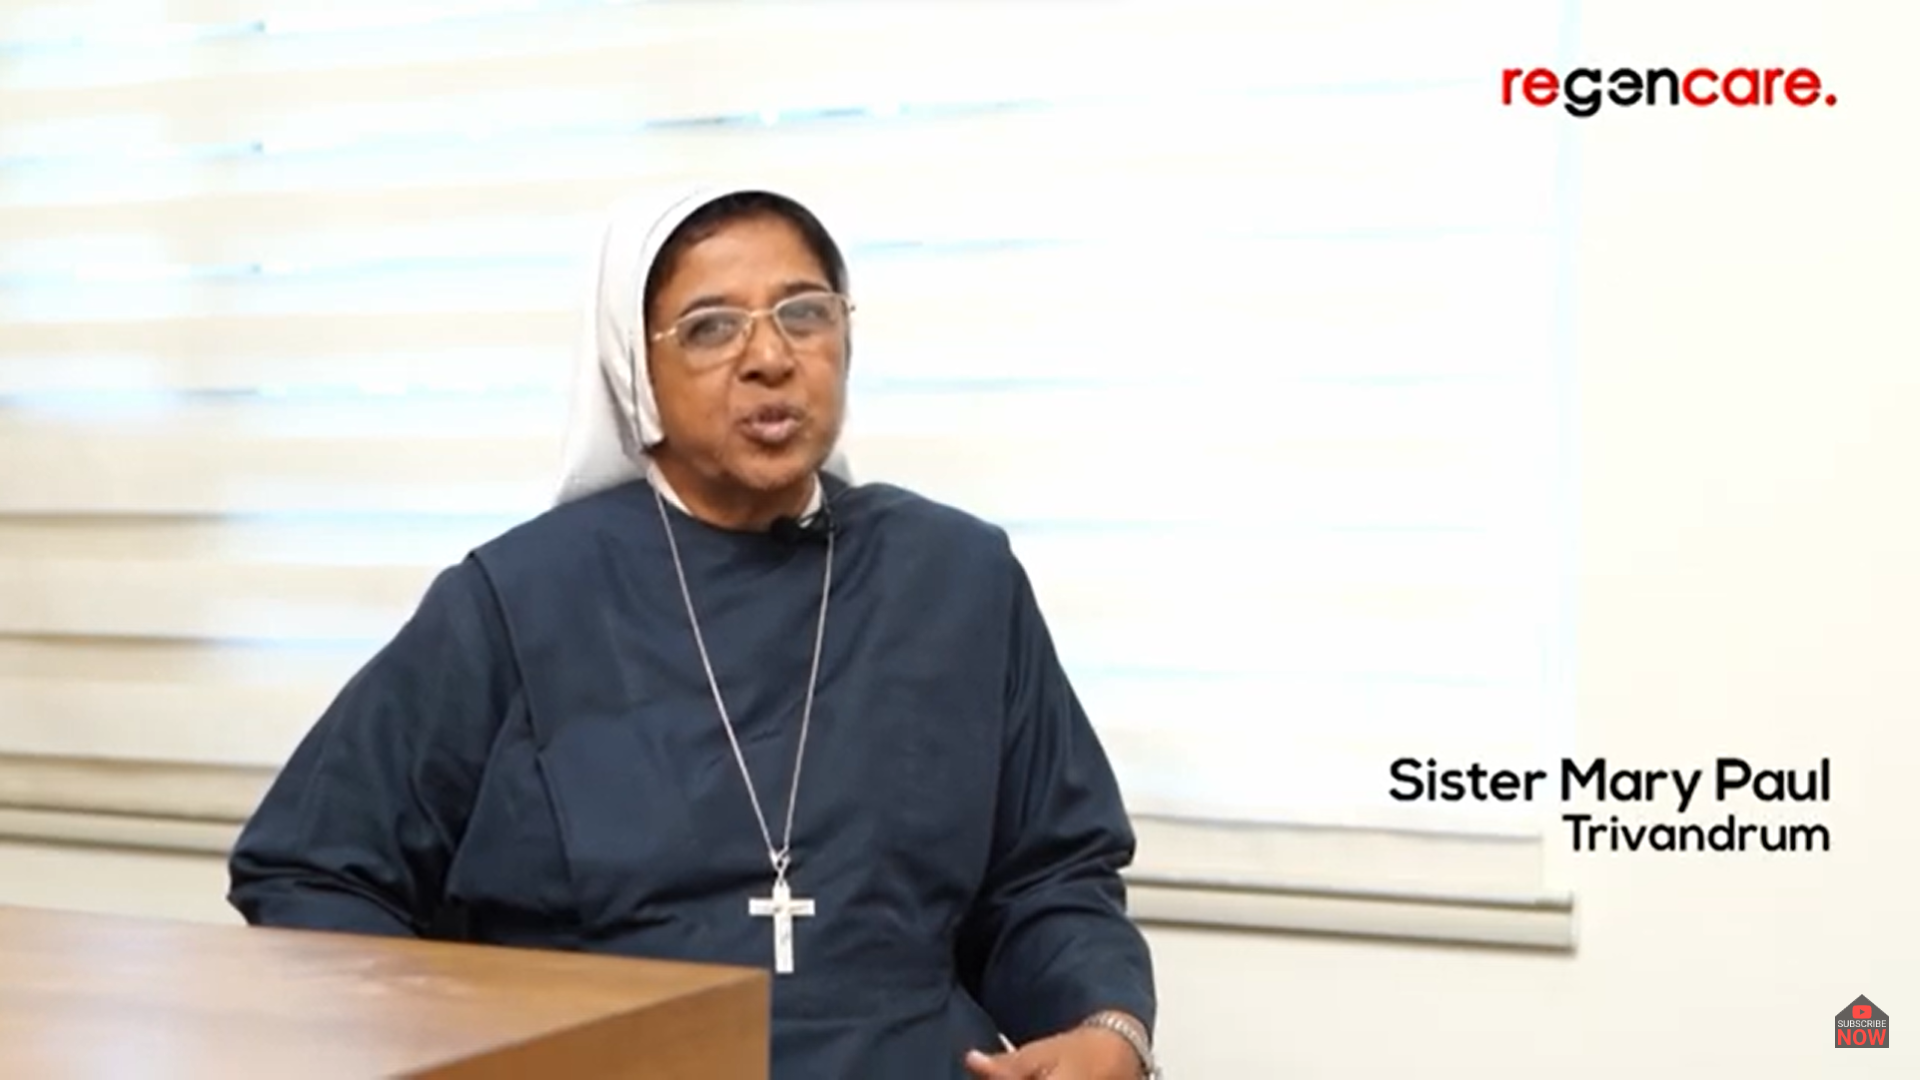 Testimonial of Sister Mary Paul at regencare